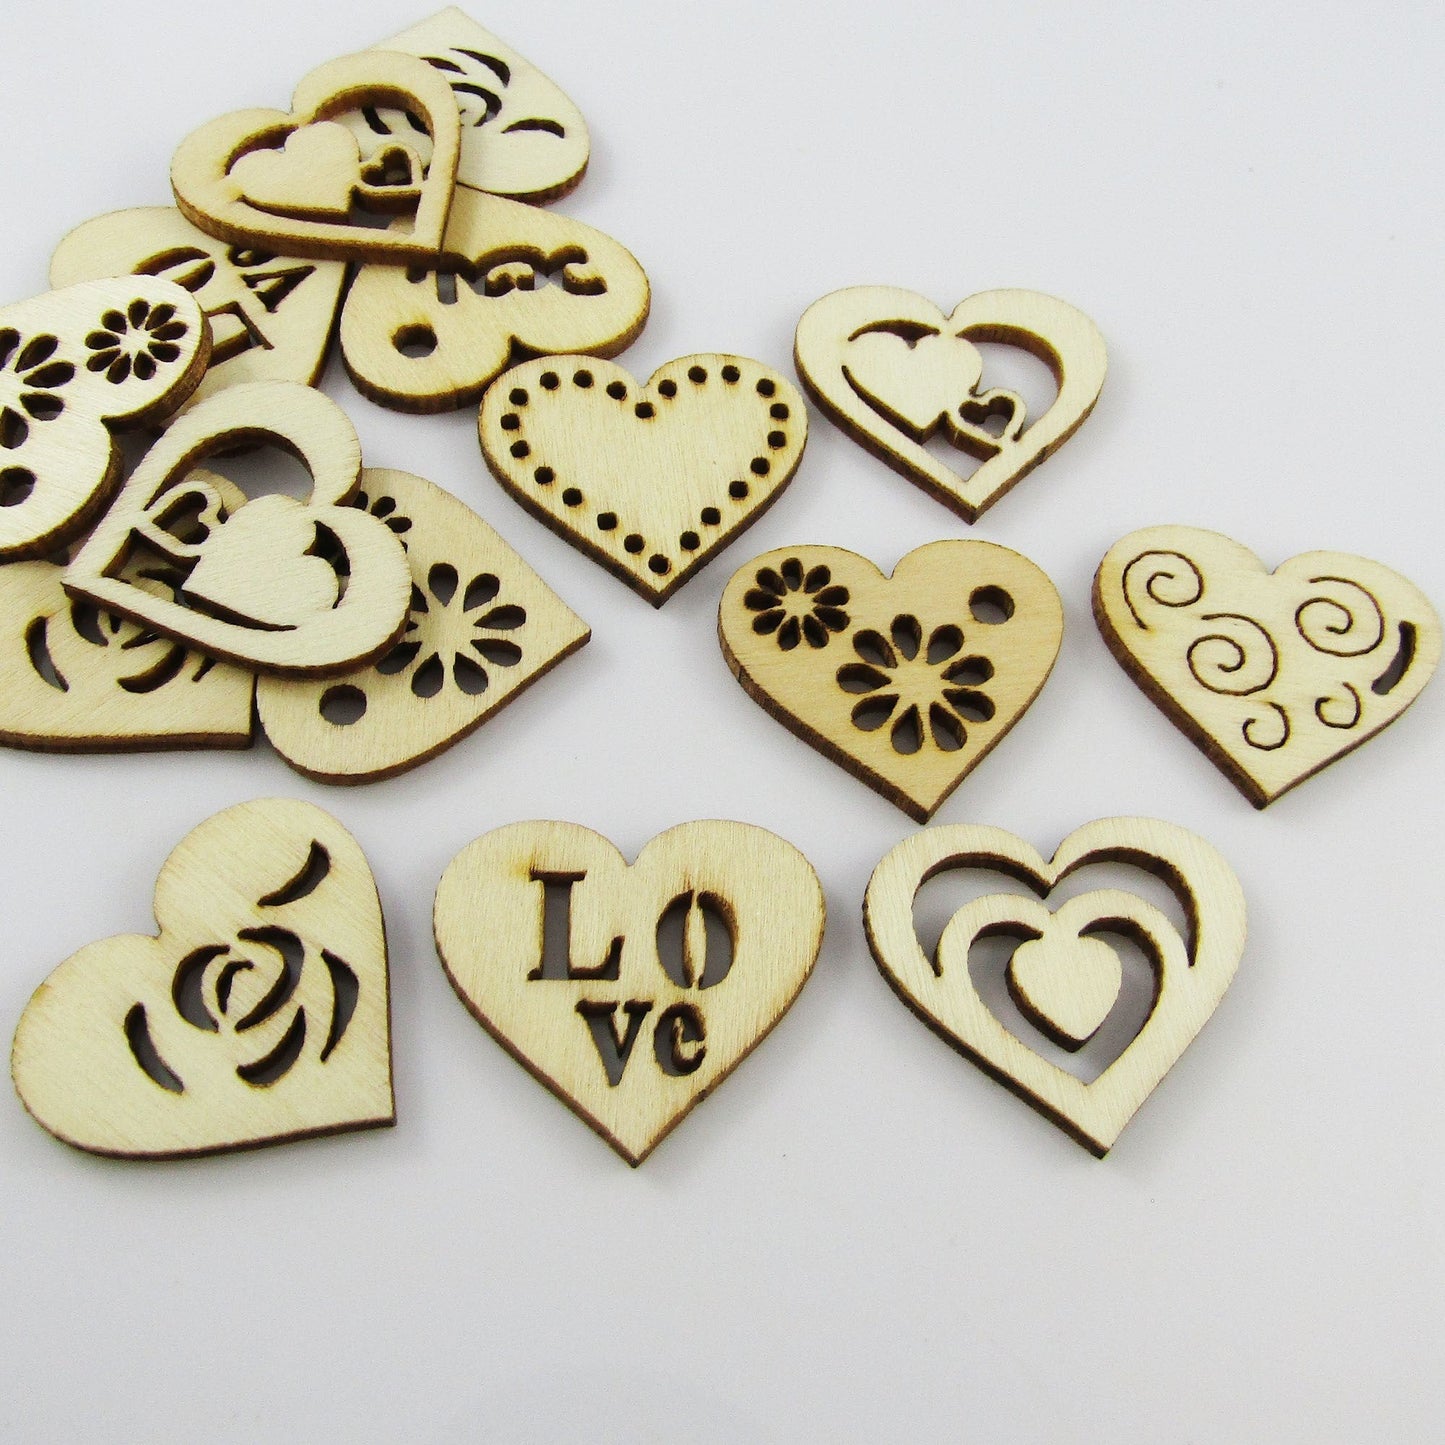 20pcs Laser Cut Wood Love Hearts Cabochons Scrapbooking Cards & More!